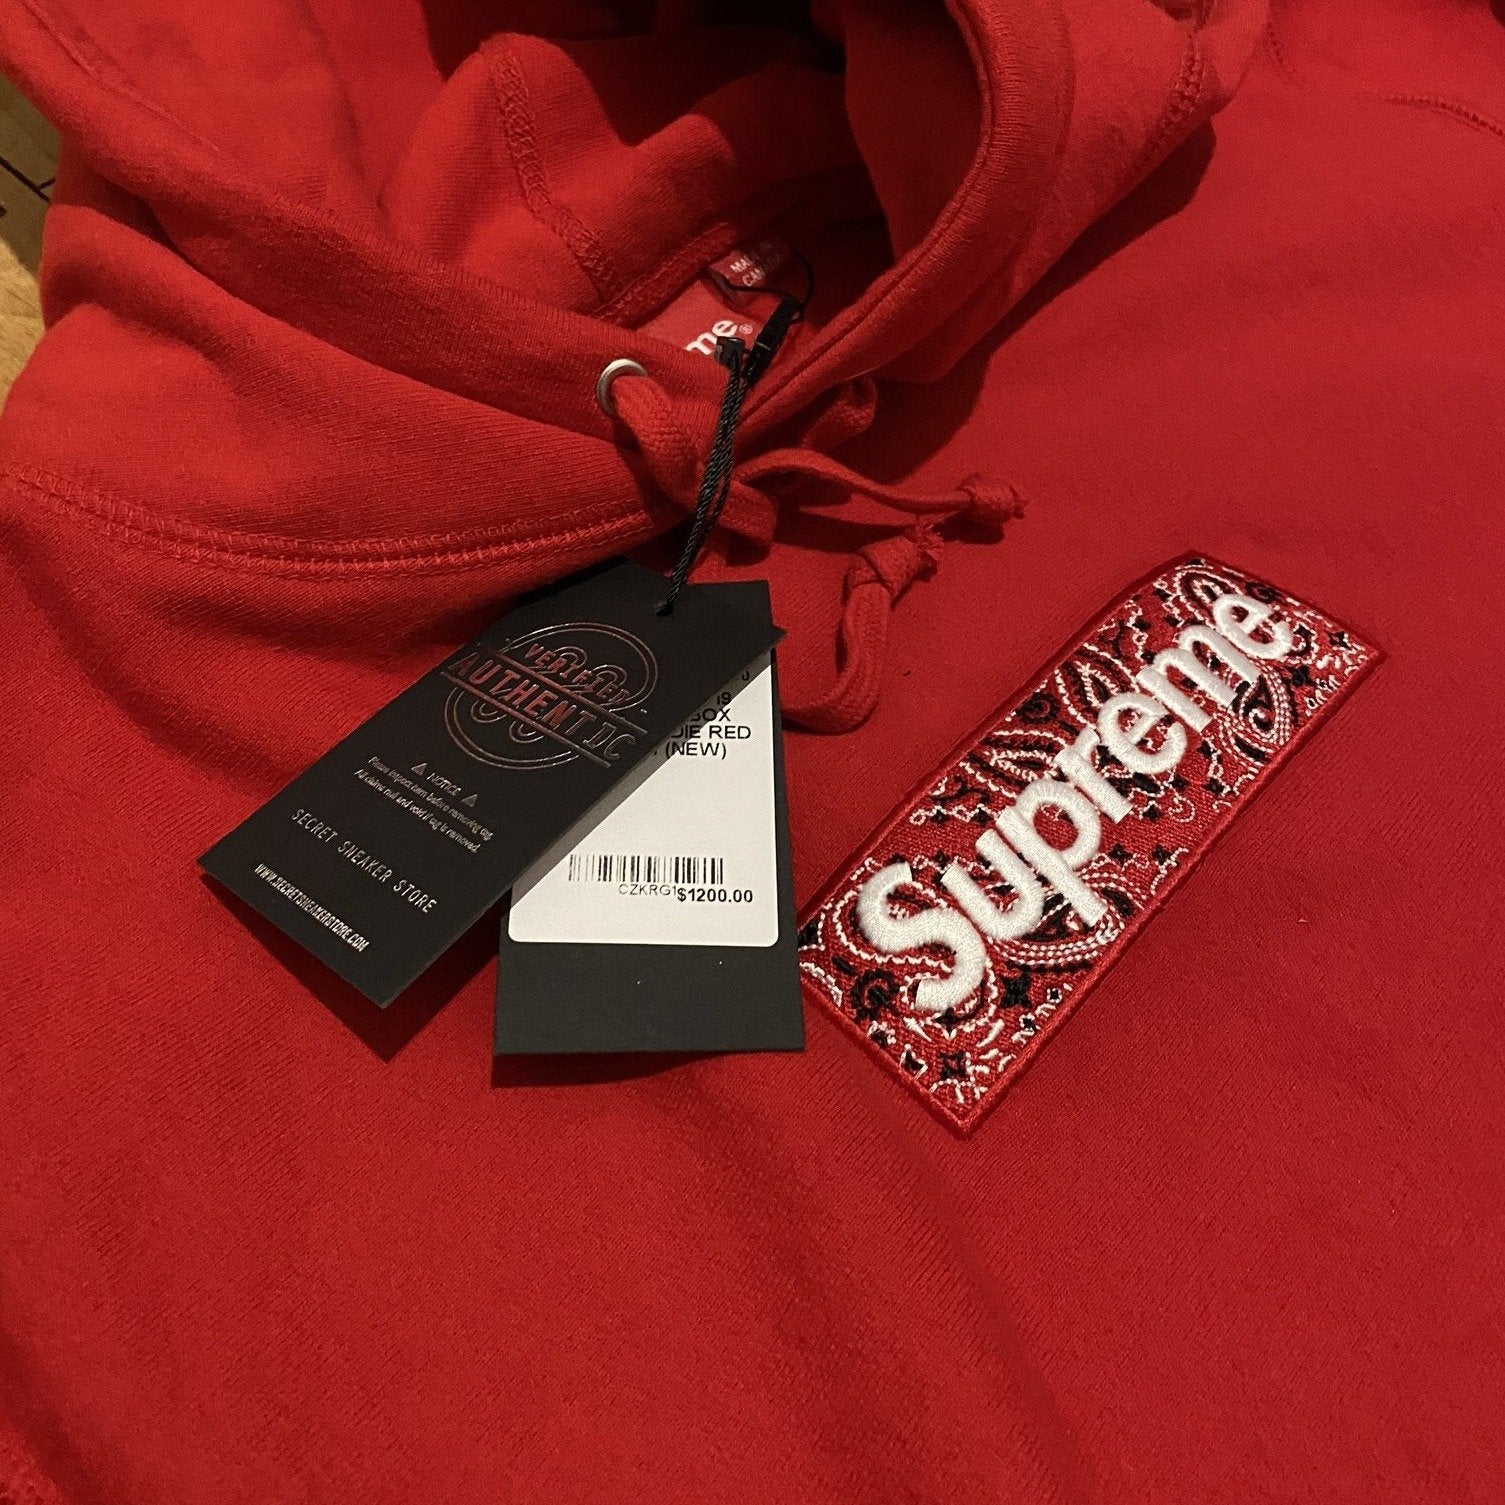 Supreme Bandana Box Logo Hooded Sweatshirt Red - Sole Cart